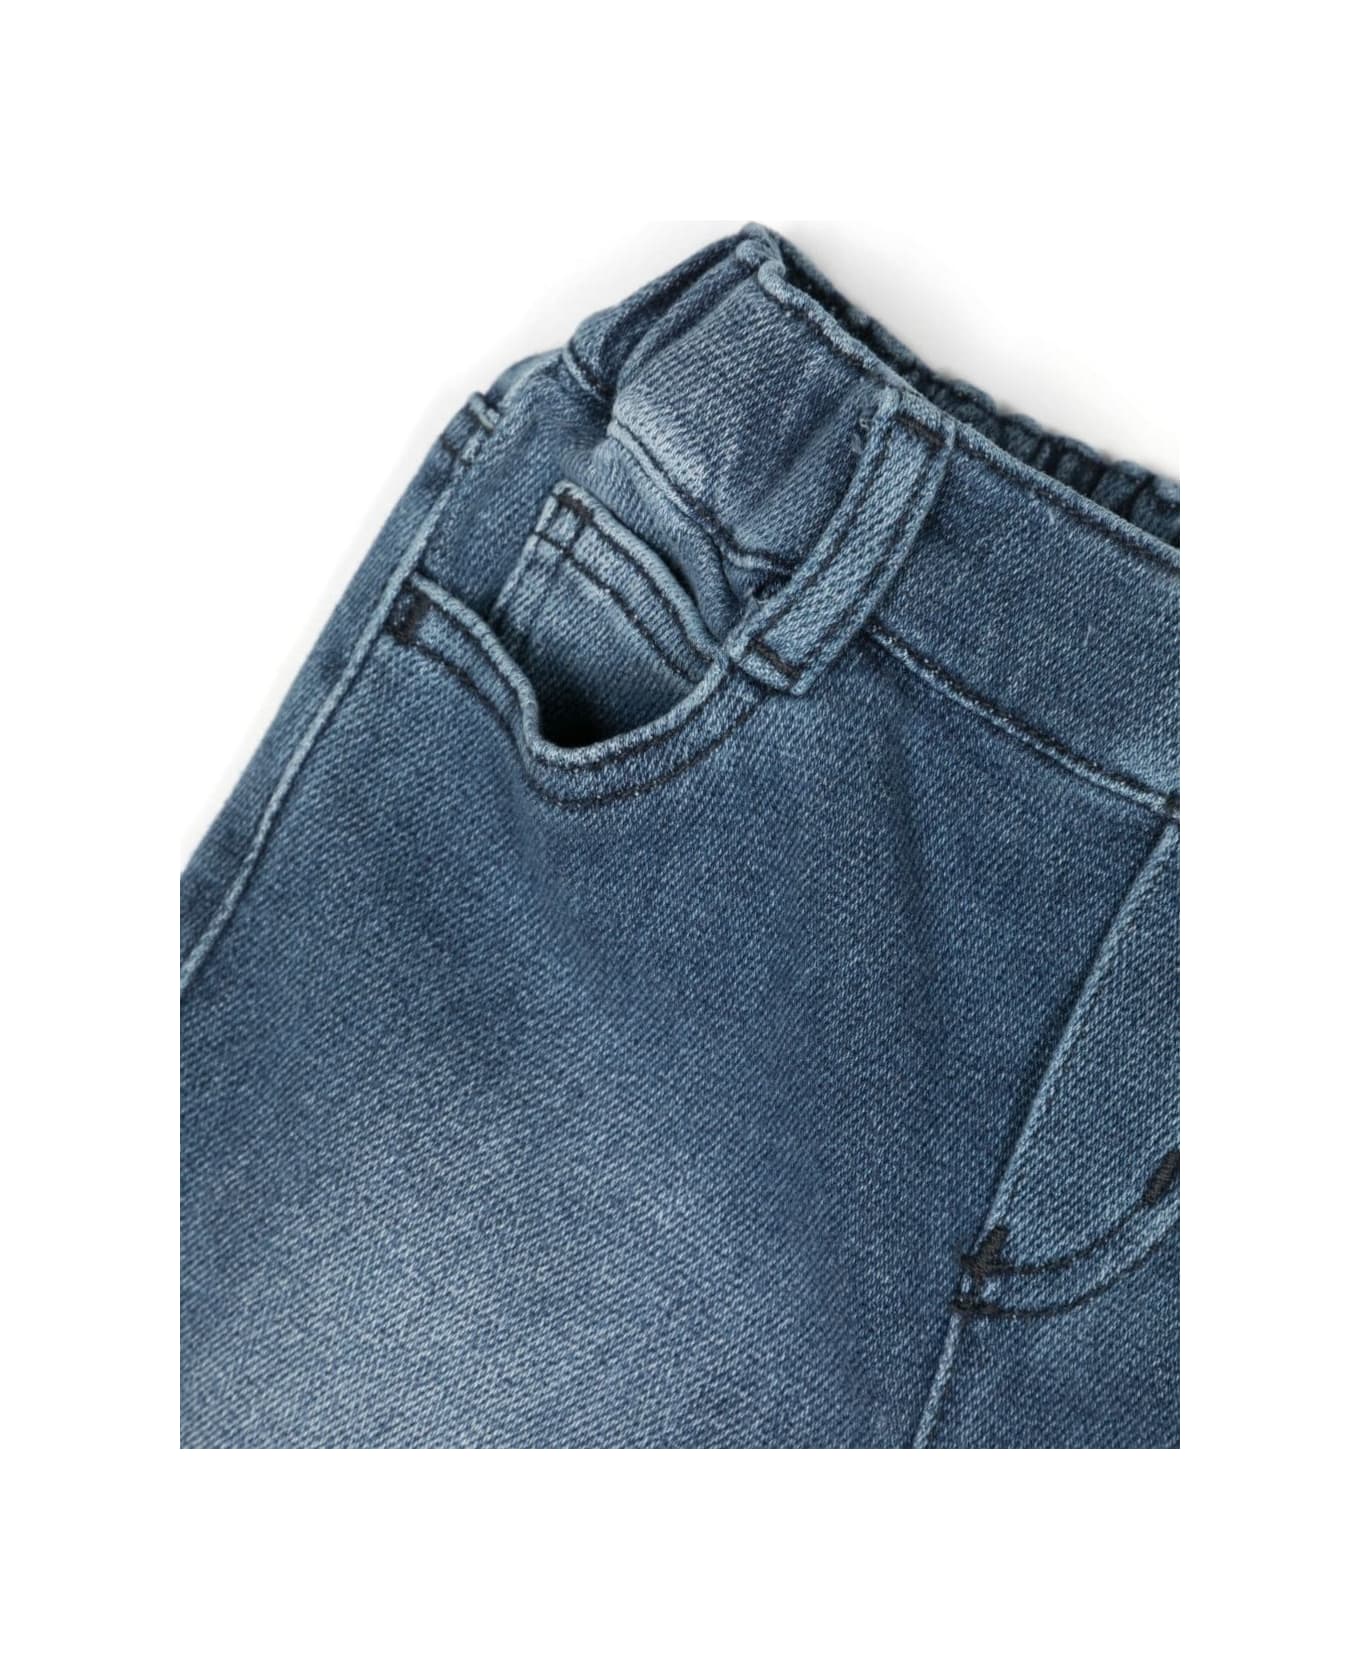 Emporio Armani Pantalone 5 Tasche - Denim Blu Md